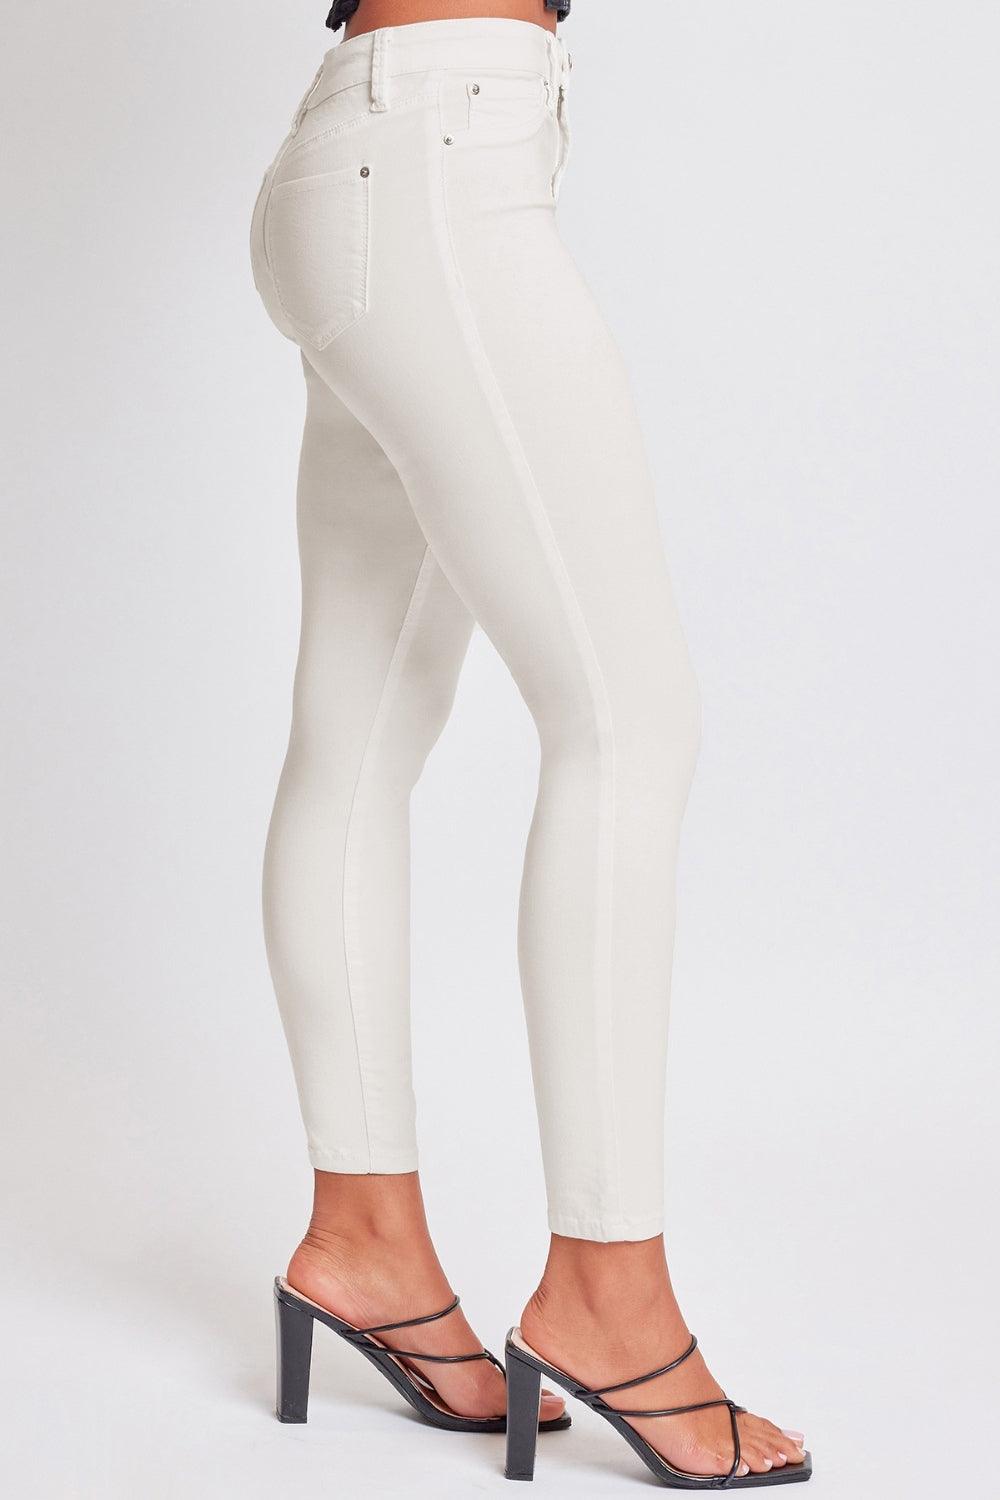 YMI Jeanswear Hyperstretch Mid Rise Skinny Jeans - Jessiz Boutique